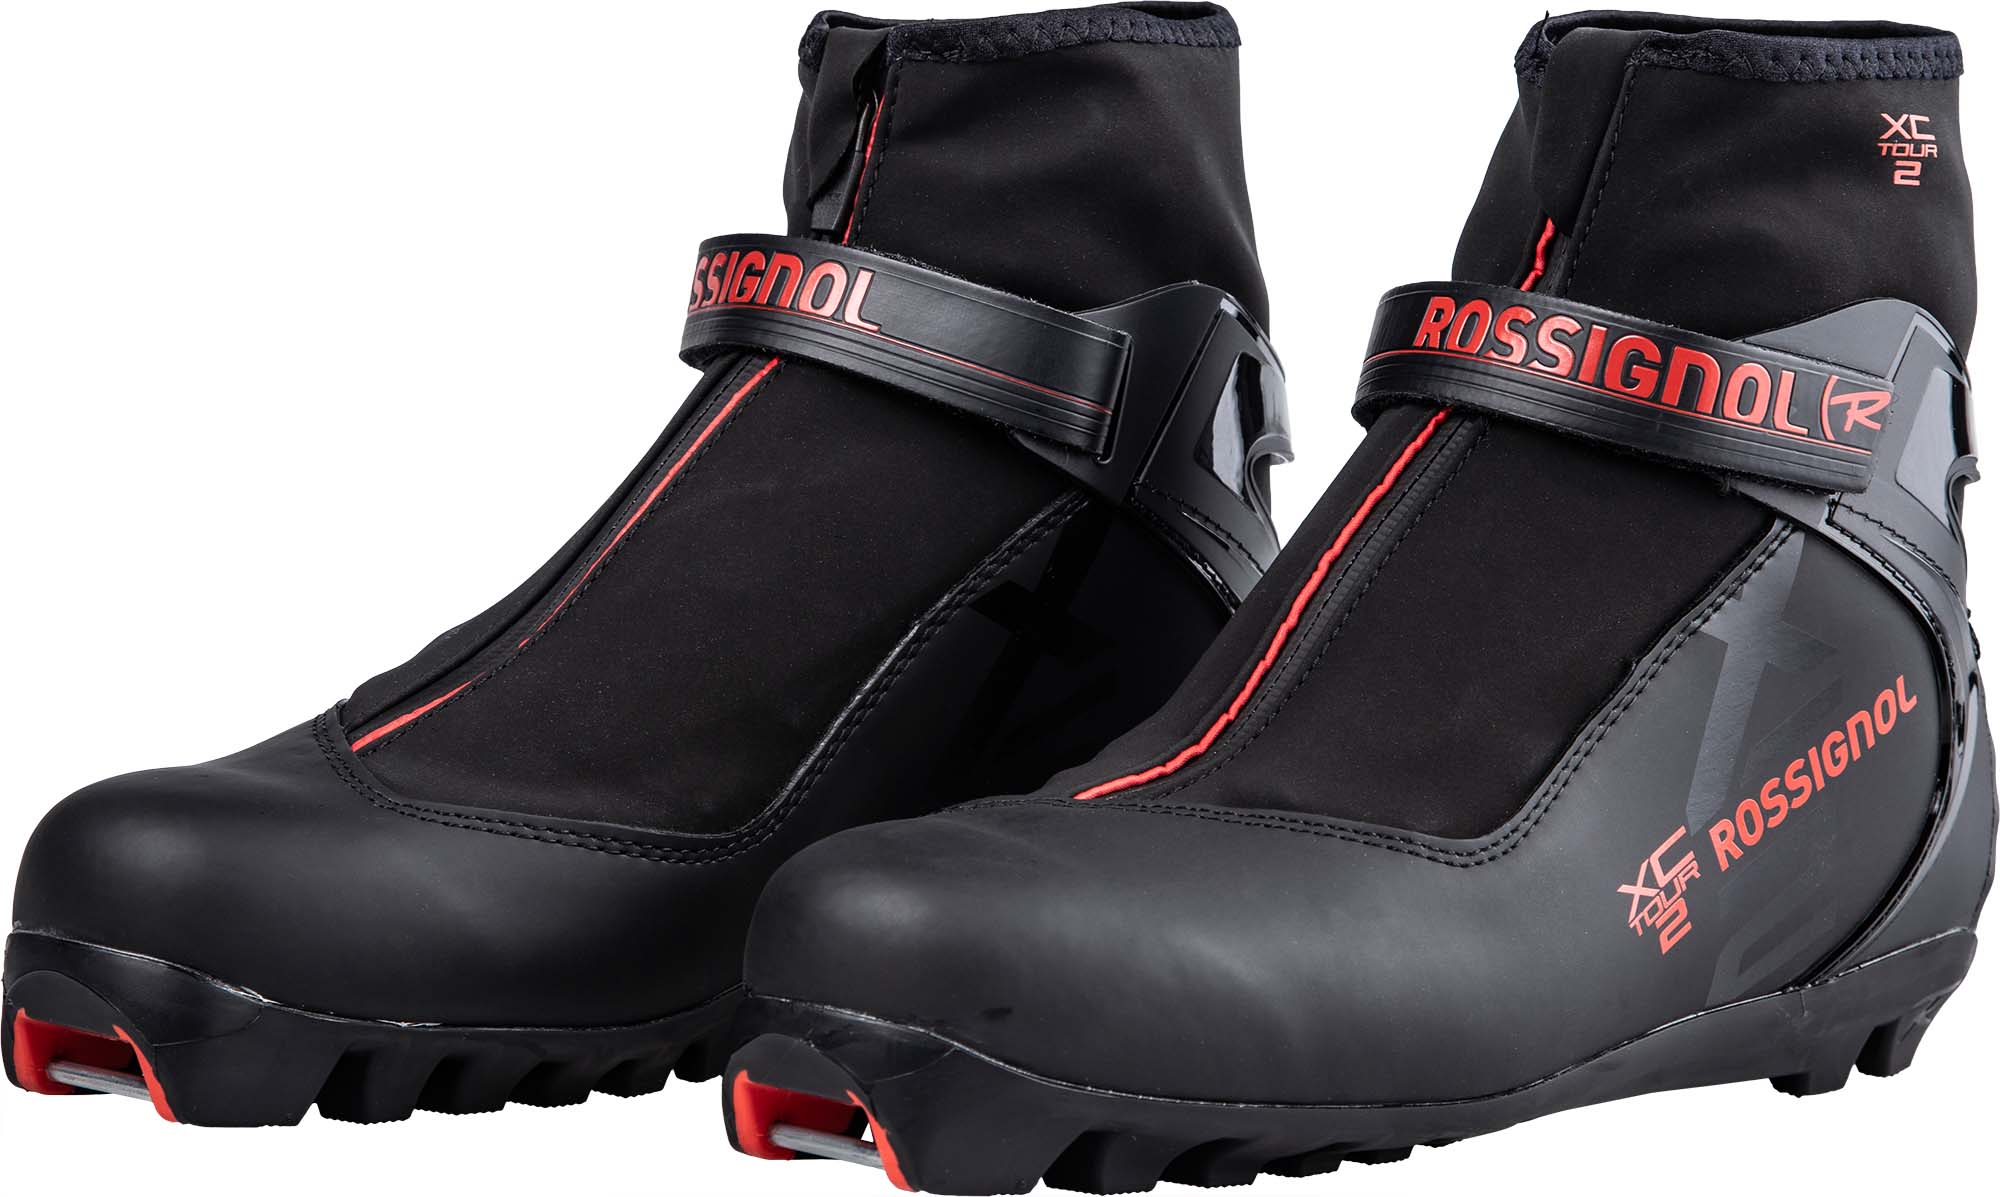 Unisex nordic ski boots